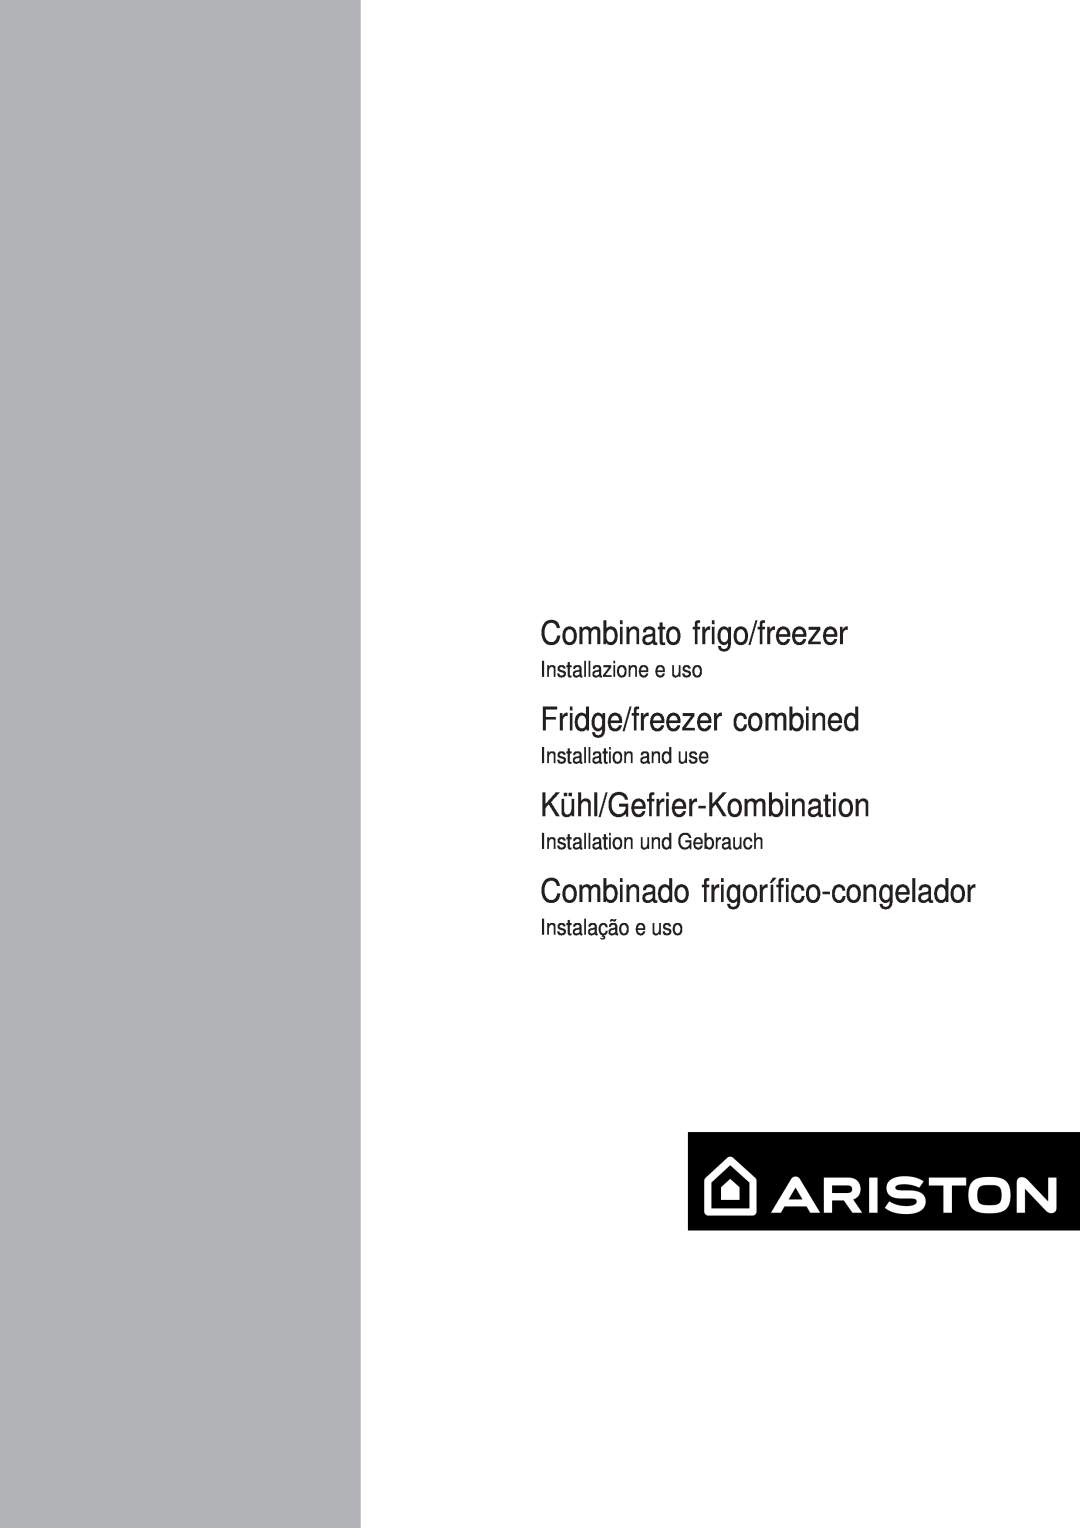 Ariston Fridge/Freezer Combined manual Combinato frigo/freezer, Fridge/freezer combined, Kühl/Gefrier-Kombination 